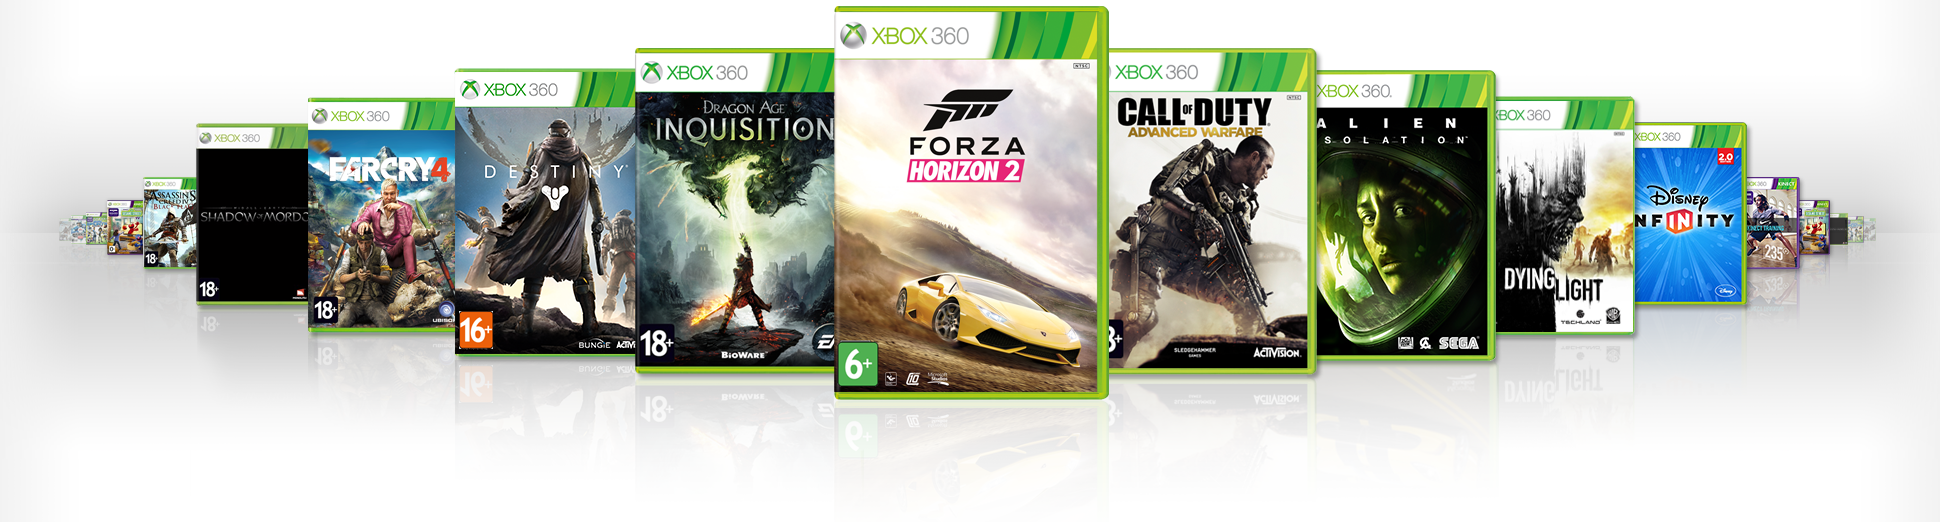 Microsoft Xbox 360 + Forza Horizon 2, World of Tanks купить